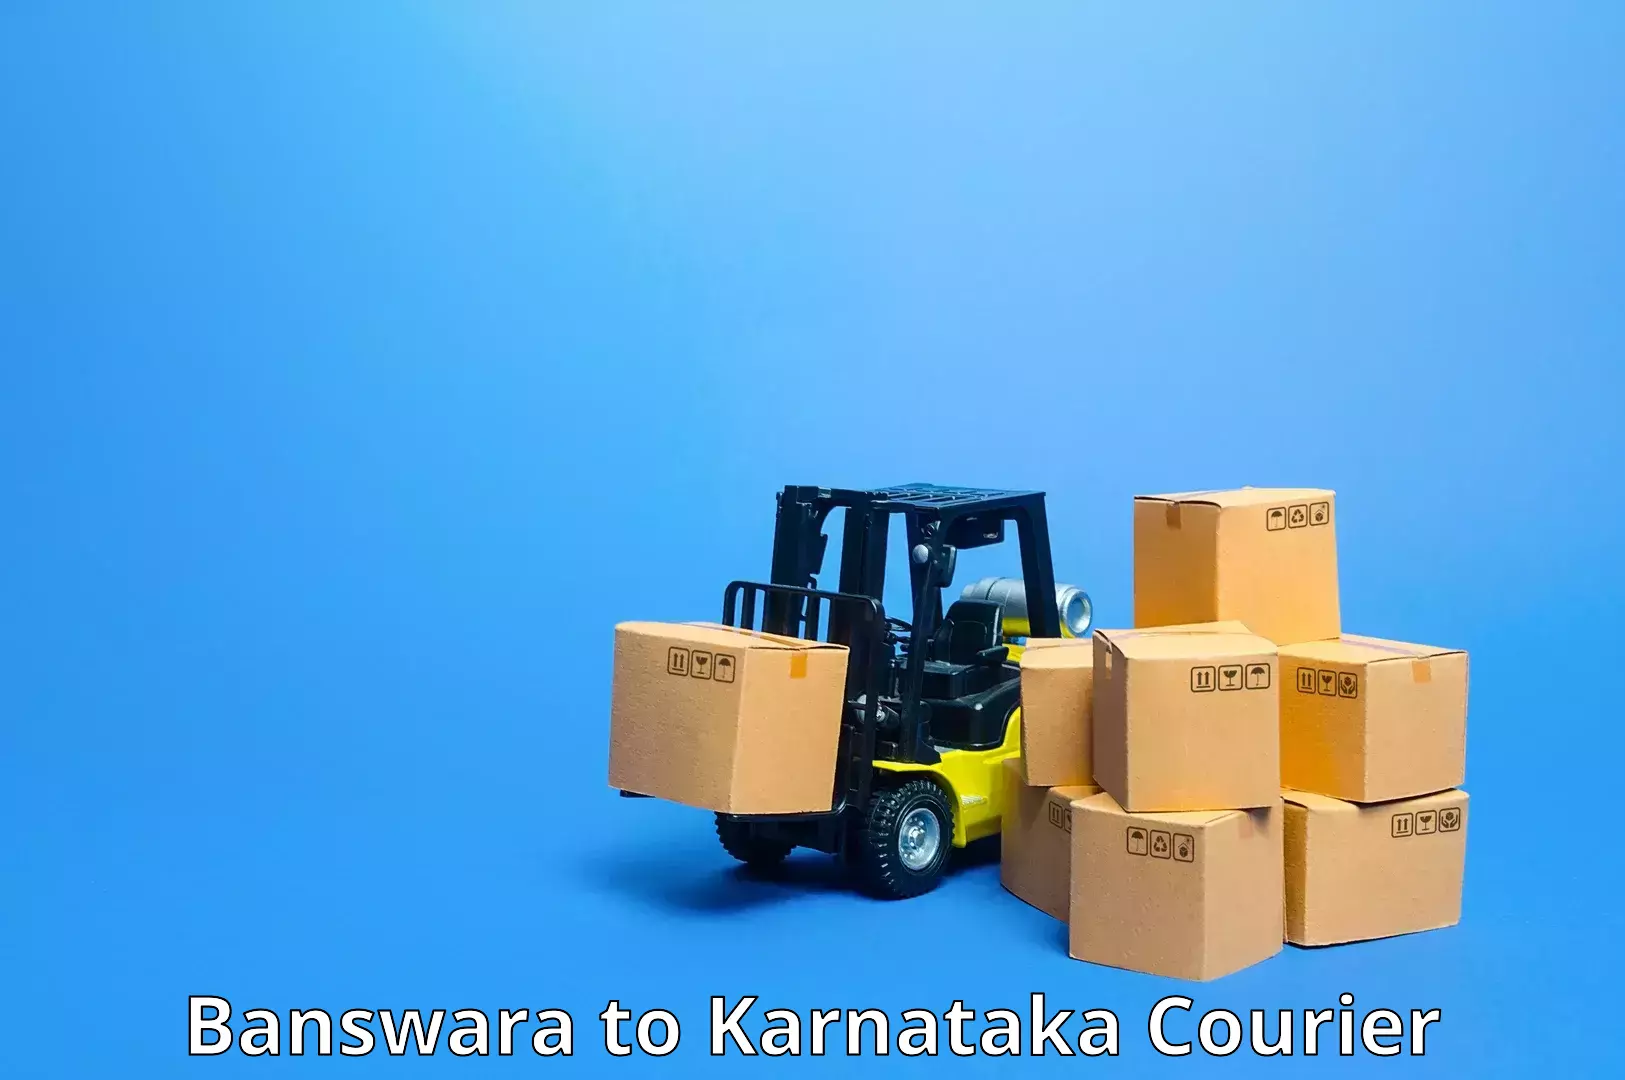 Courier service efficiency Banswara to Kalaburagi